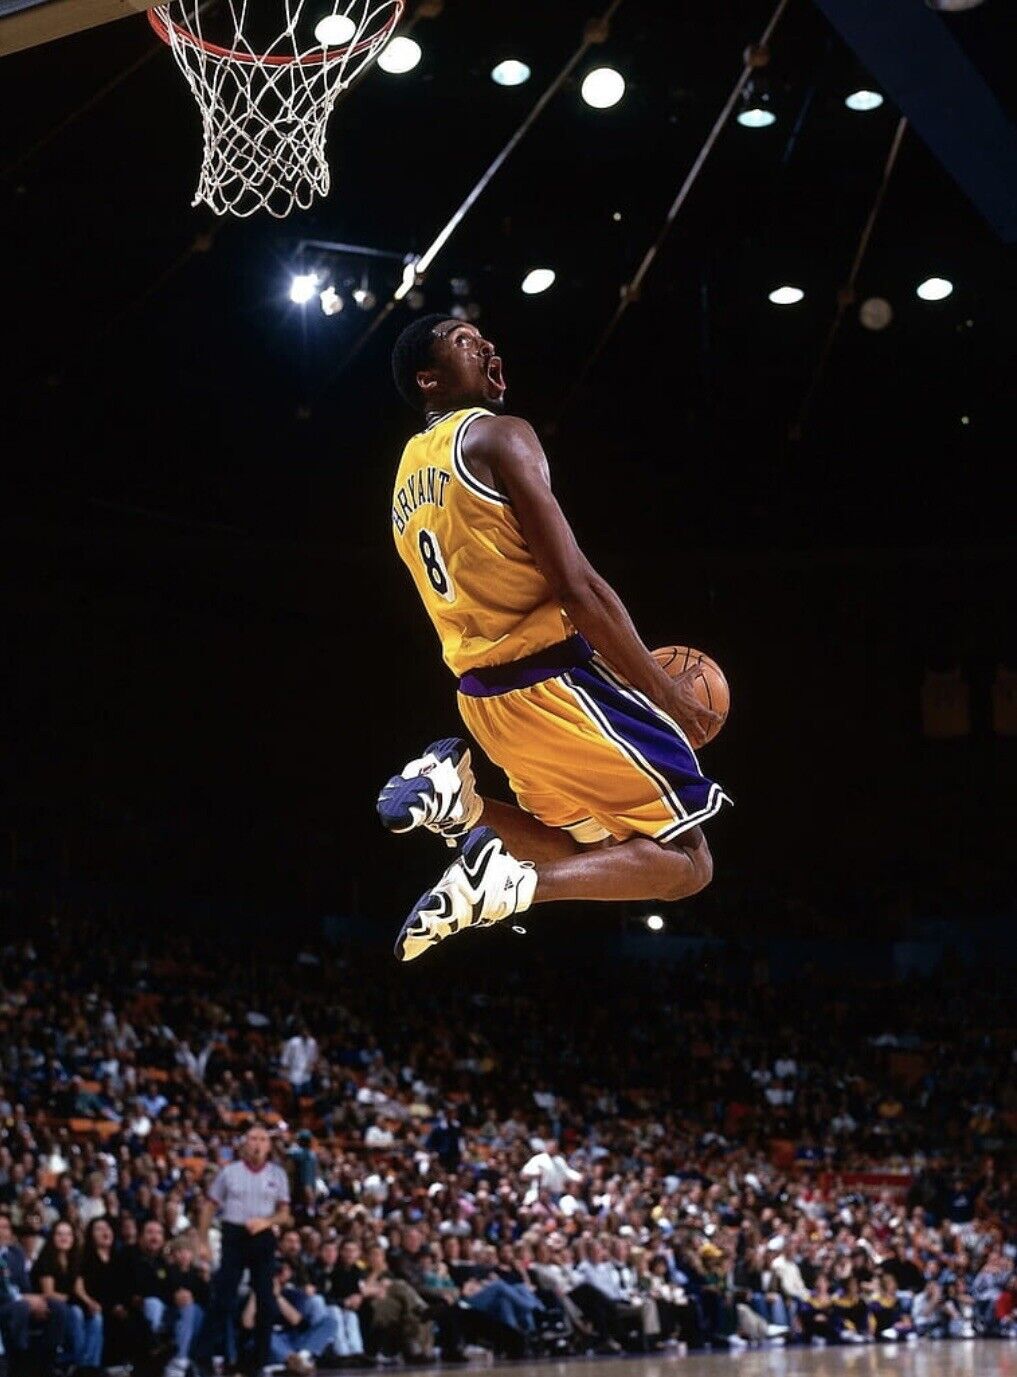 “KOBE BRYANT” NBA Legend 18x AllStar Iconic Sports Athlete 8X10 Color Photo. NEW